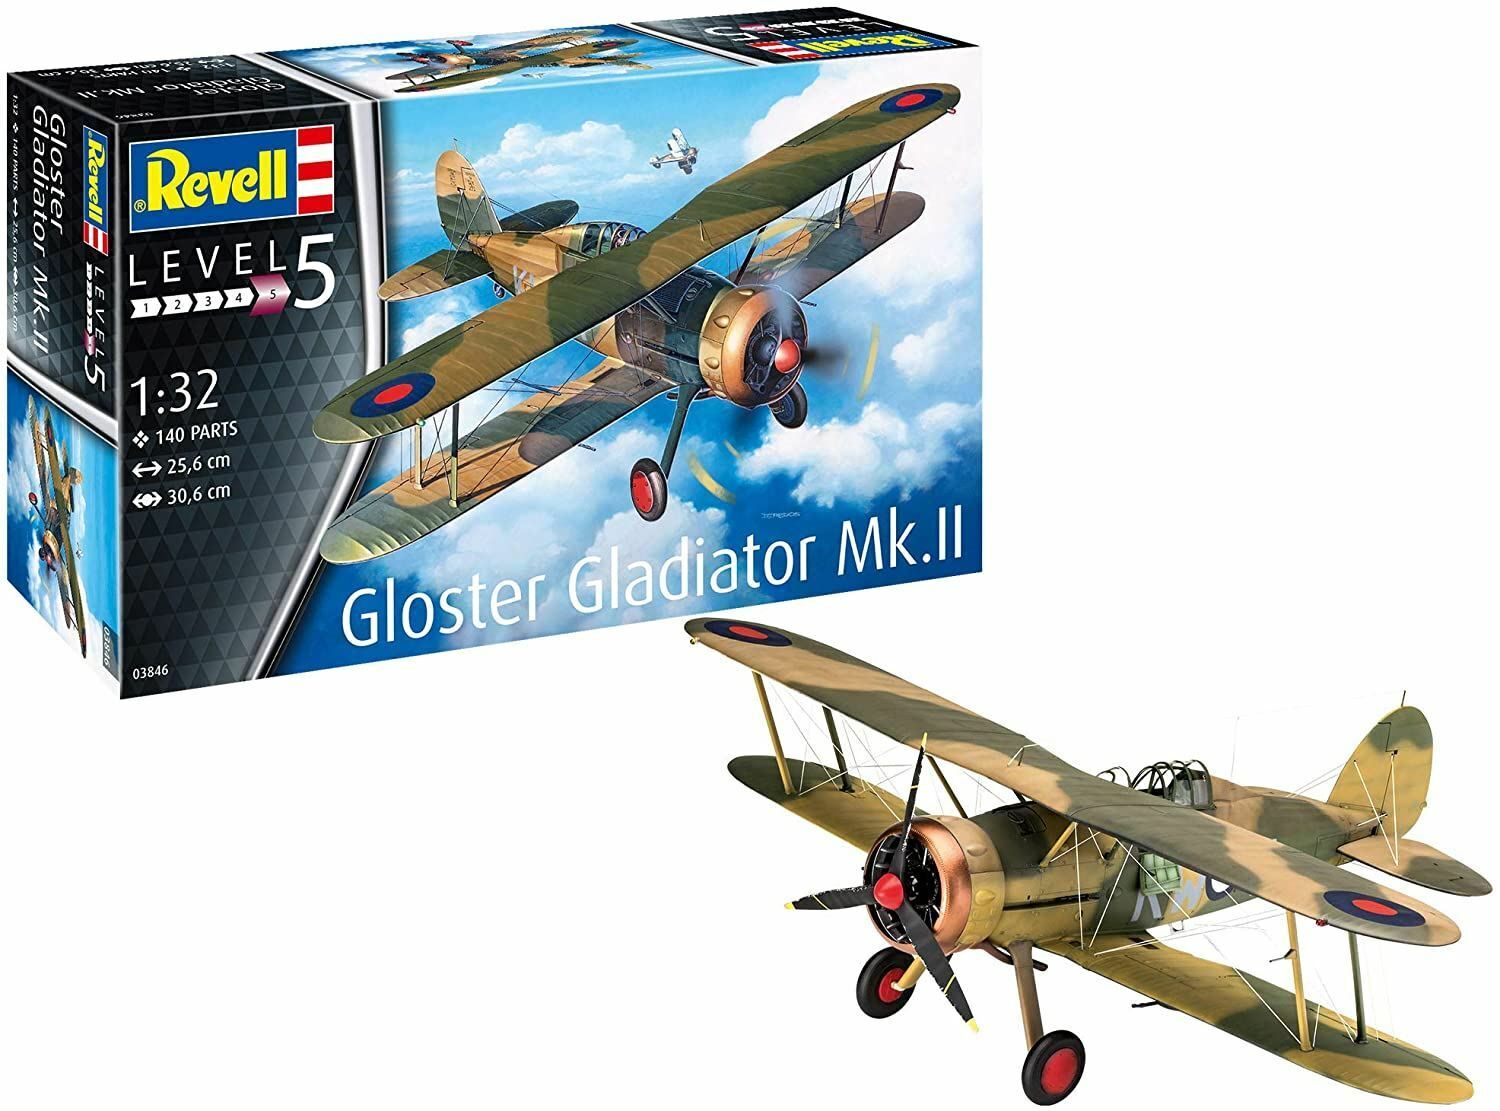 Gloster Gladiator Mk. II 1:32 Scale Kit